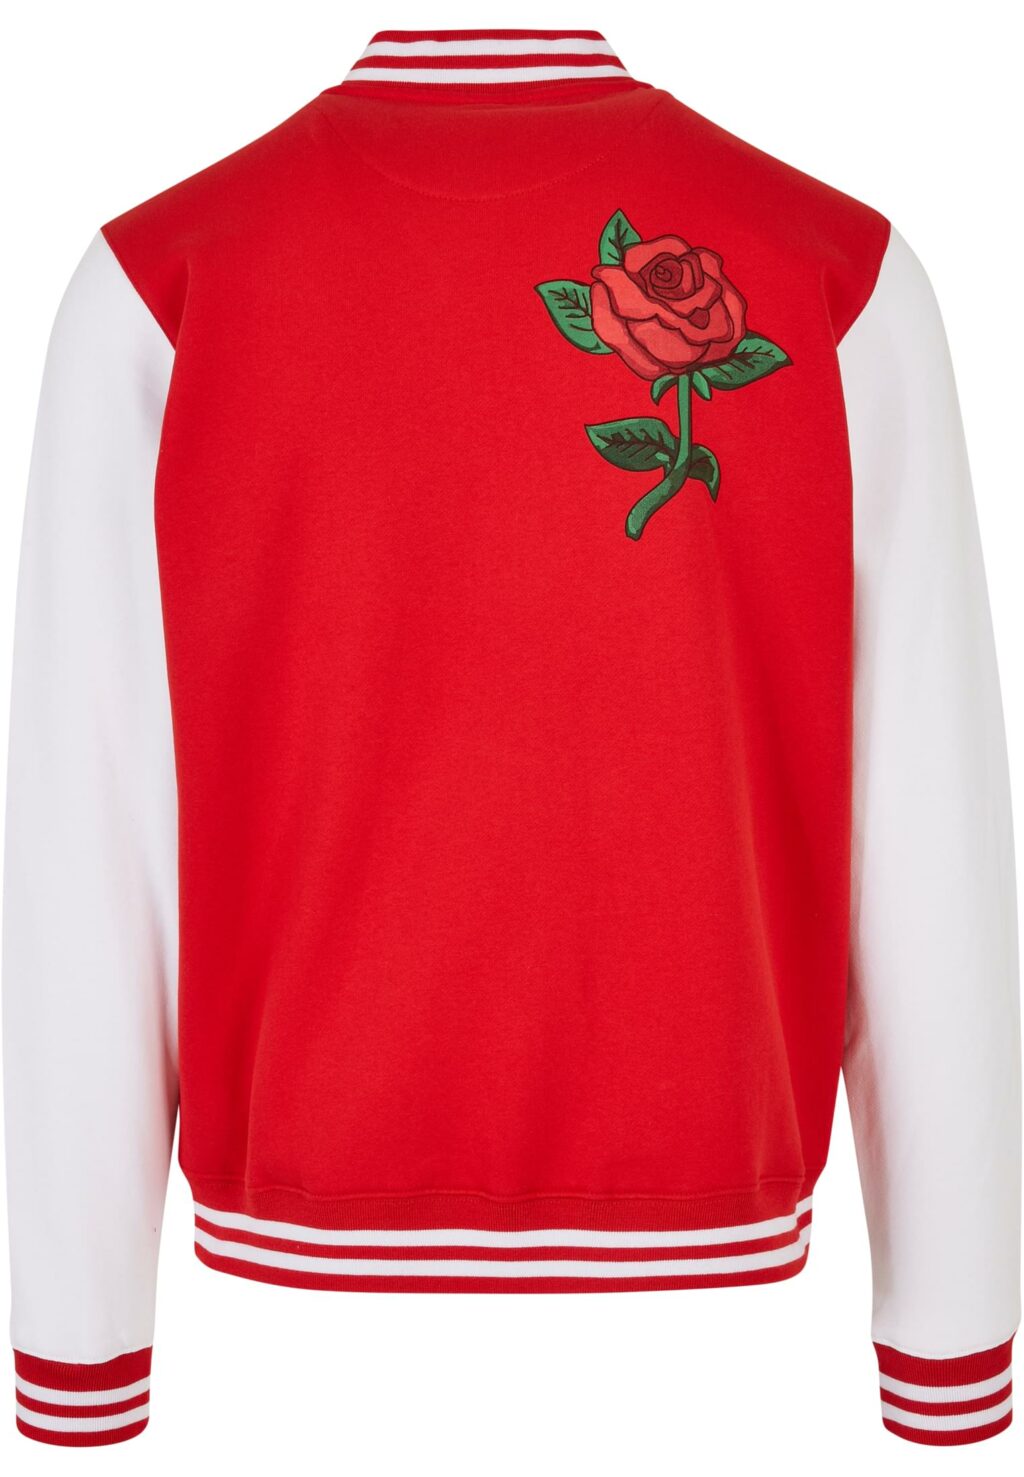 Rose College Jacket red/wht MT2378